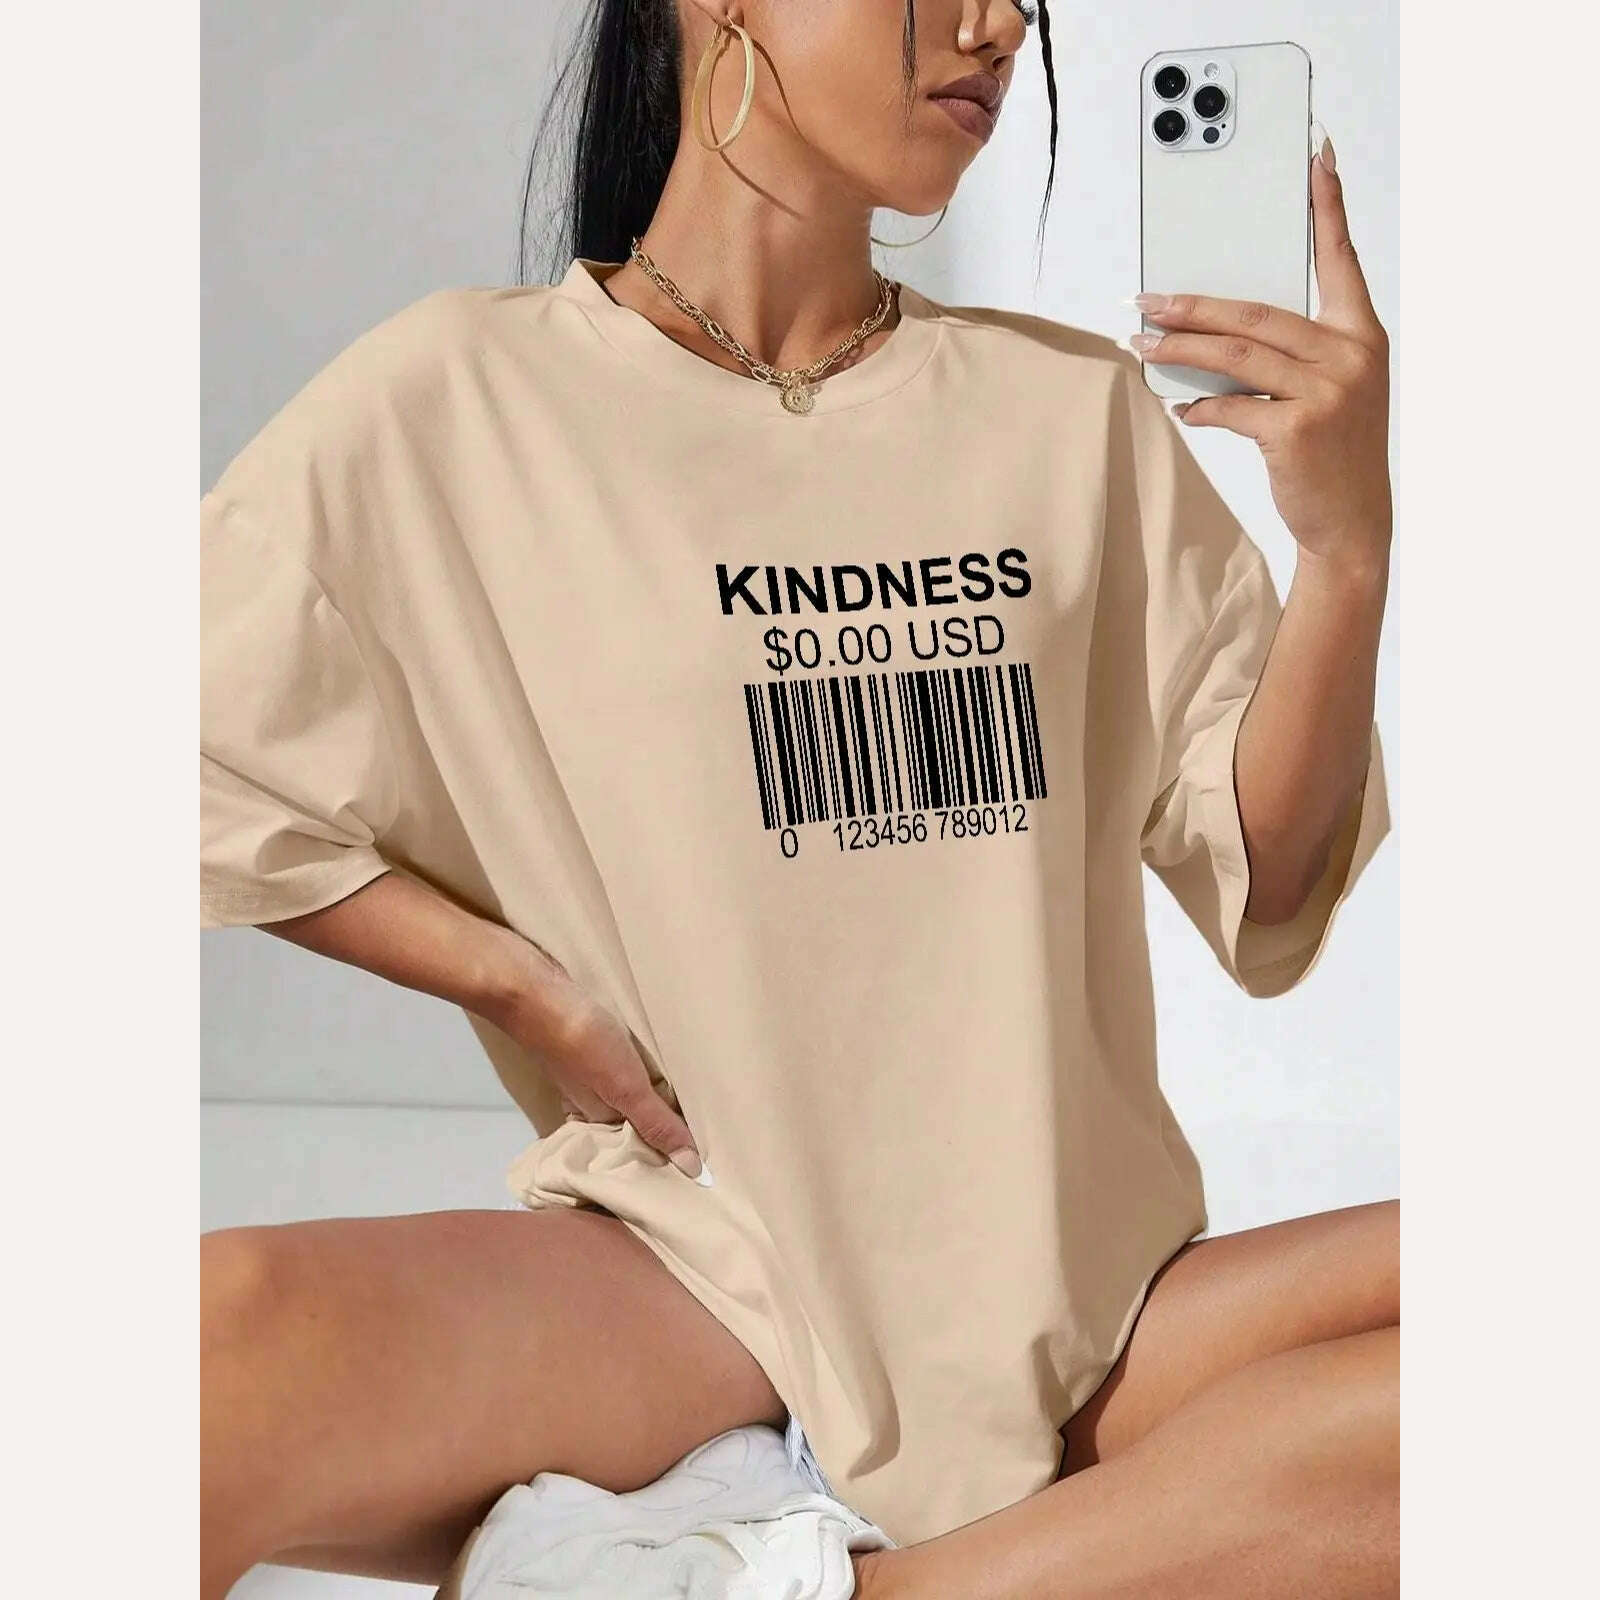 KIMLUD, Kindness Creative Bar Code Creativity Womens Short Sleeve Funny Casual Oversize Tops All-math Trend T-Shirts Woman Tee Clothing, Khaki / XL, KIMLUD Women's Clothes